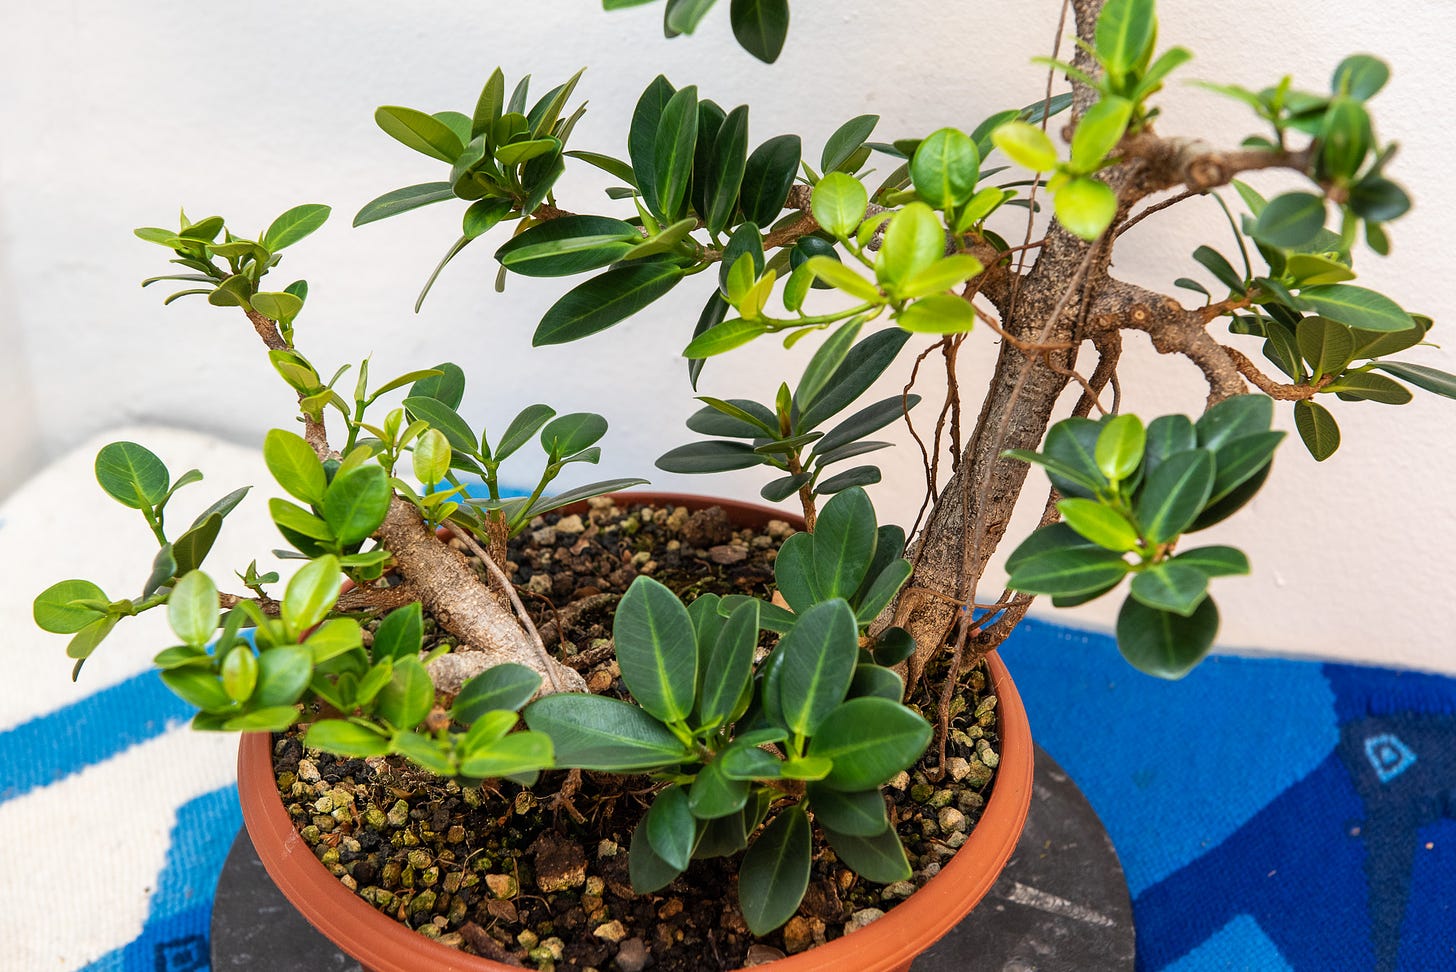 ID: Raft style ficus microcarpa pre bonsai, looking healthy